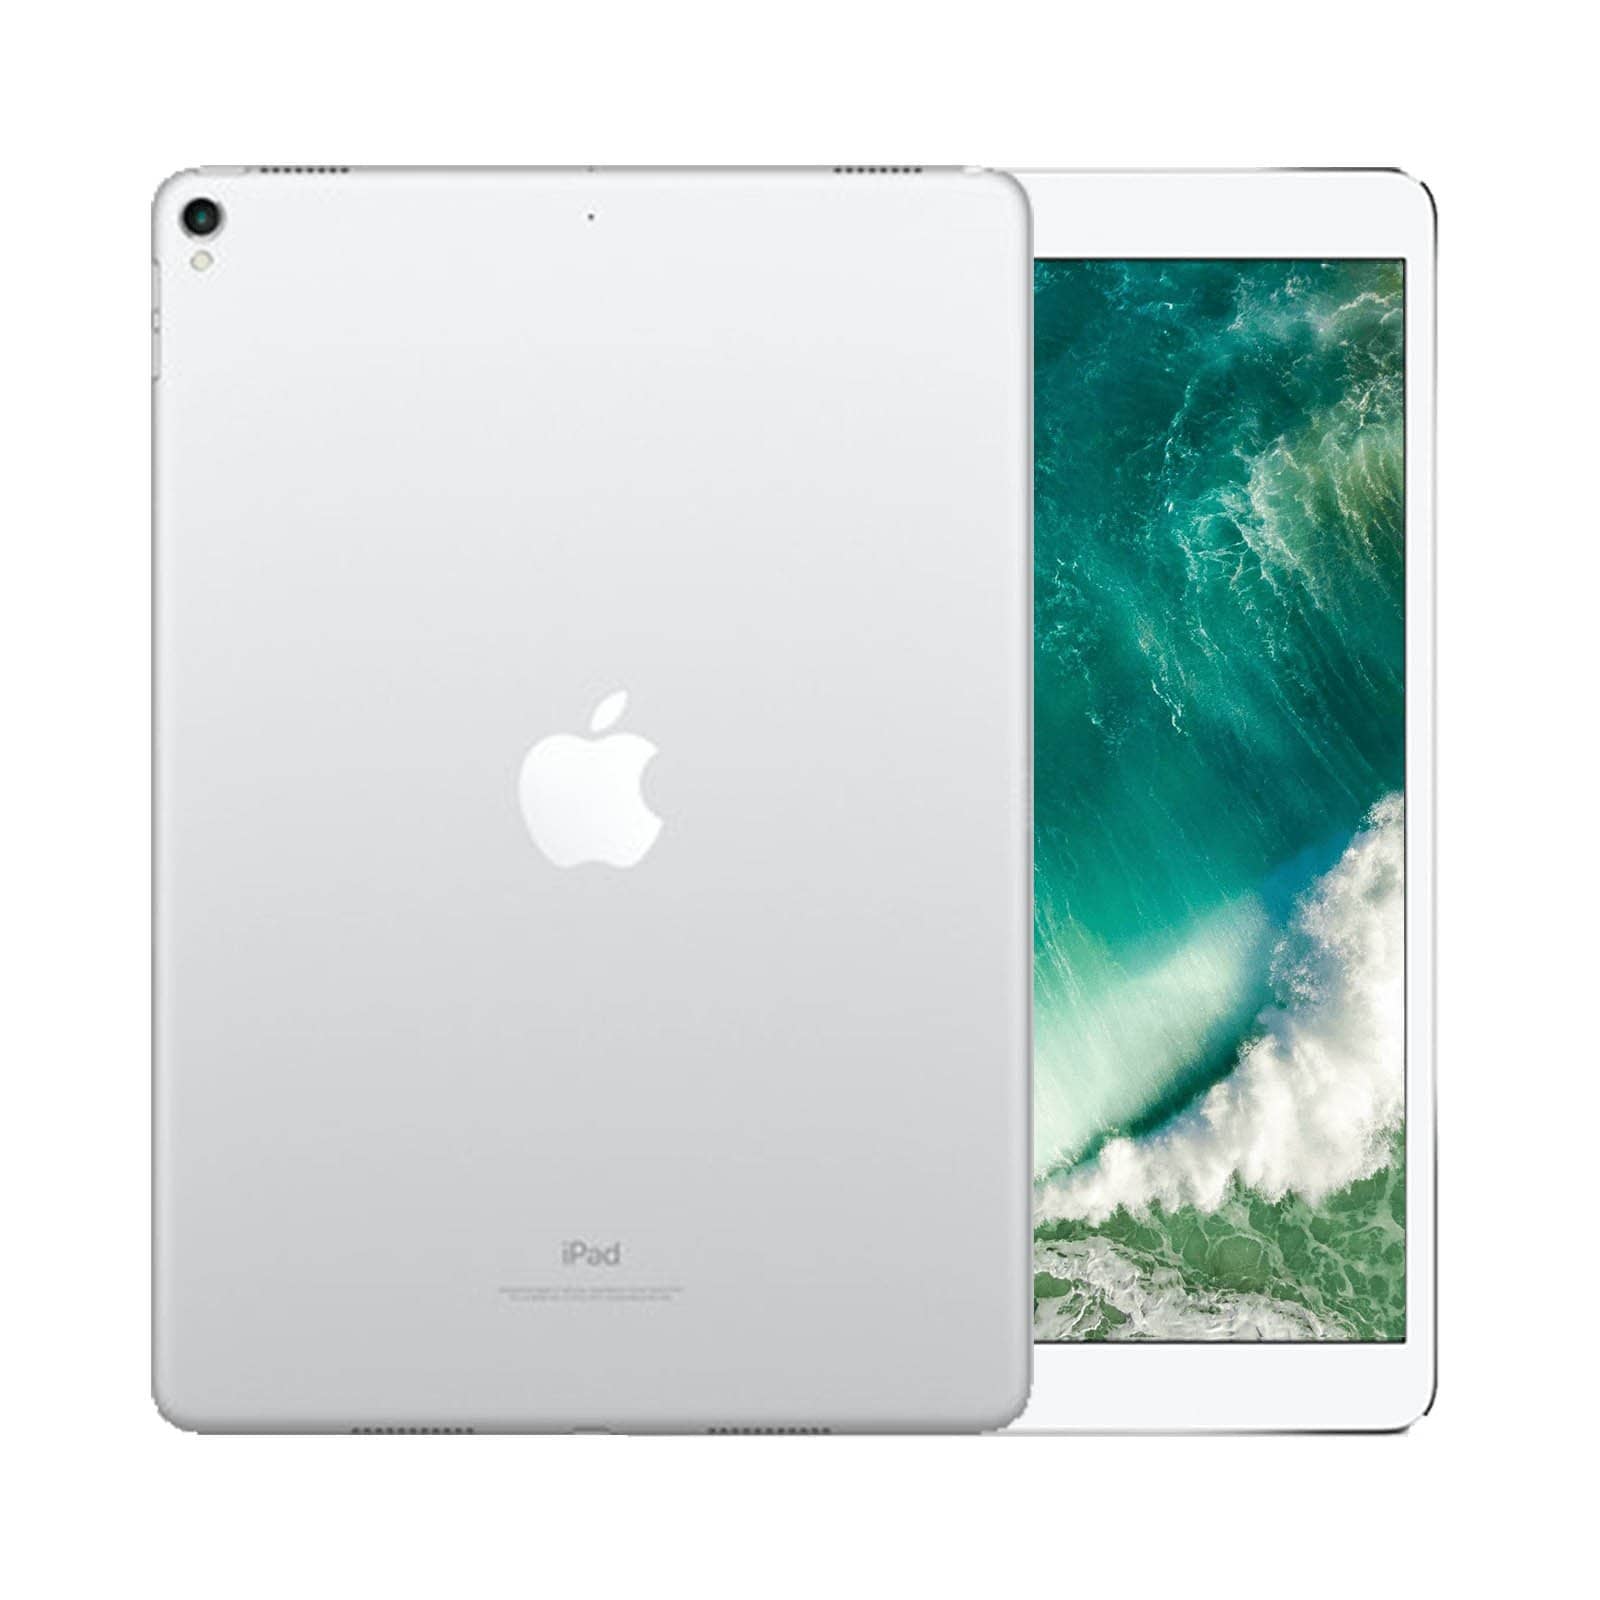 iPad Pro 10.5 Inch 256GB Silver Good - WiFi 256GB Silver Good